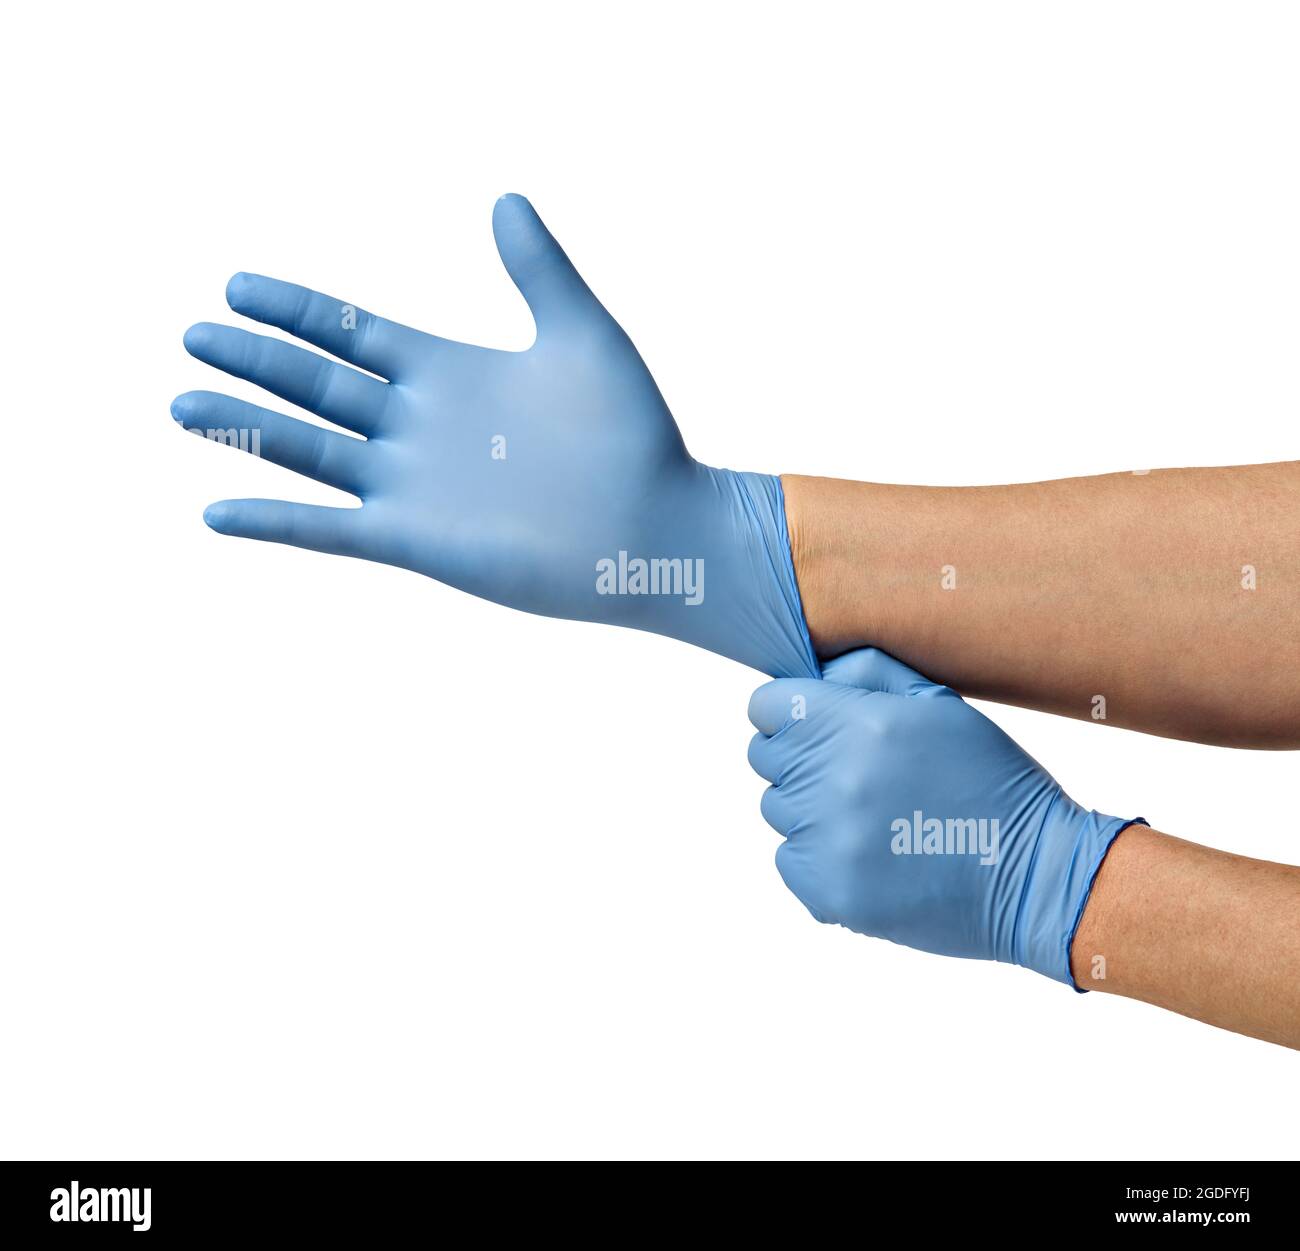 latex glove protective protection virus corona coronavirus disease epidemic medical health hygiene hand Stock Photo